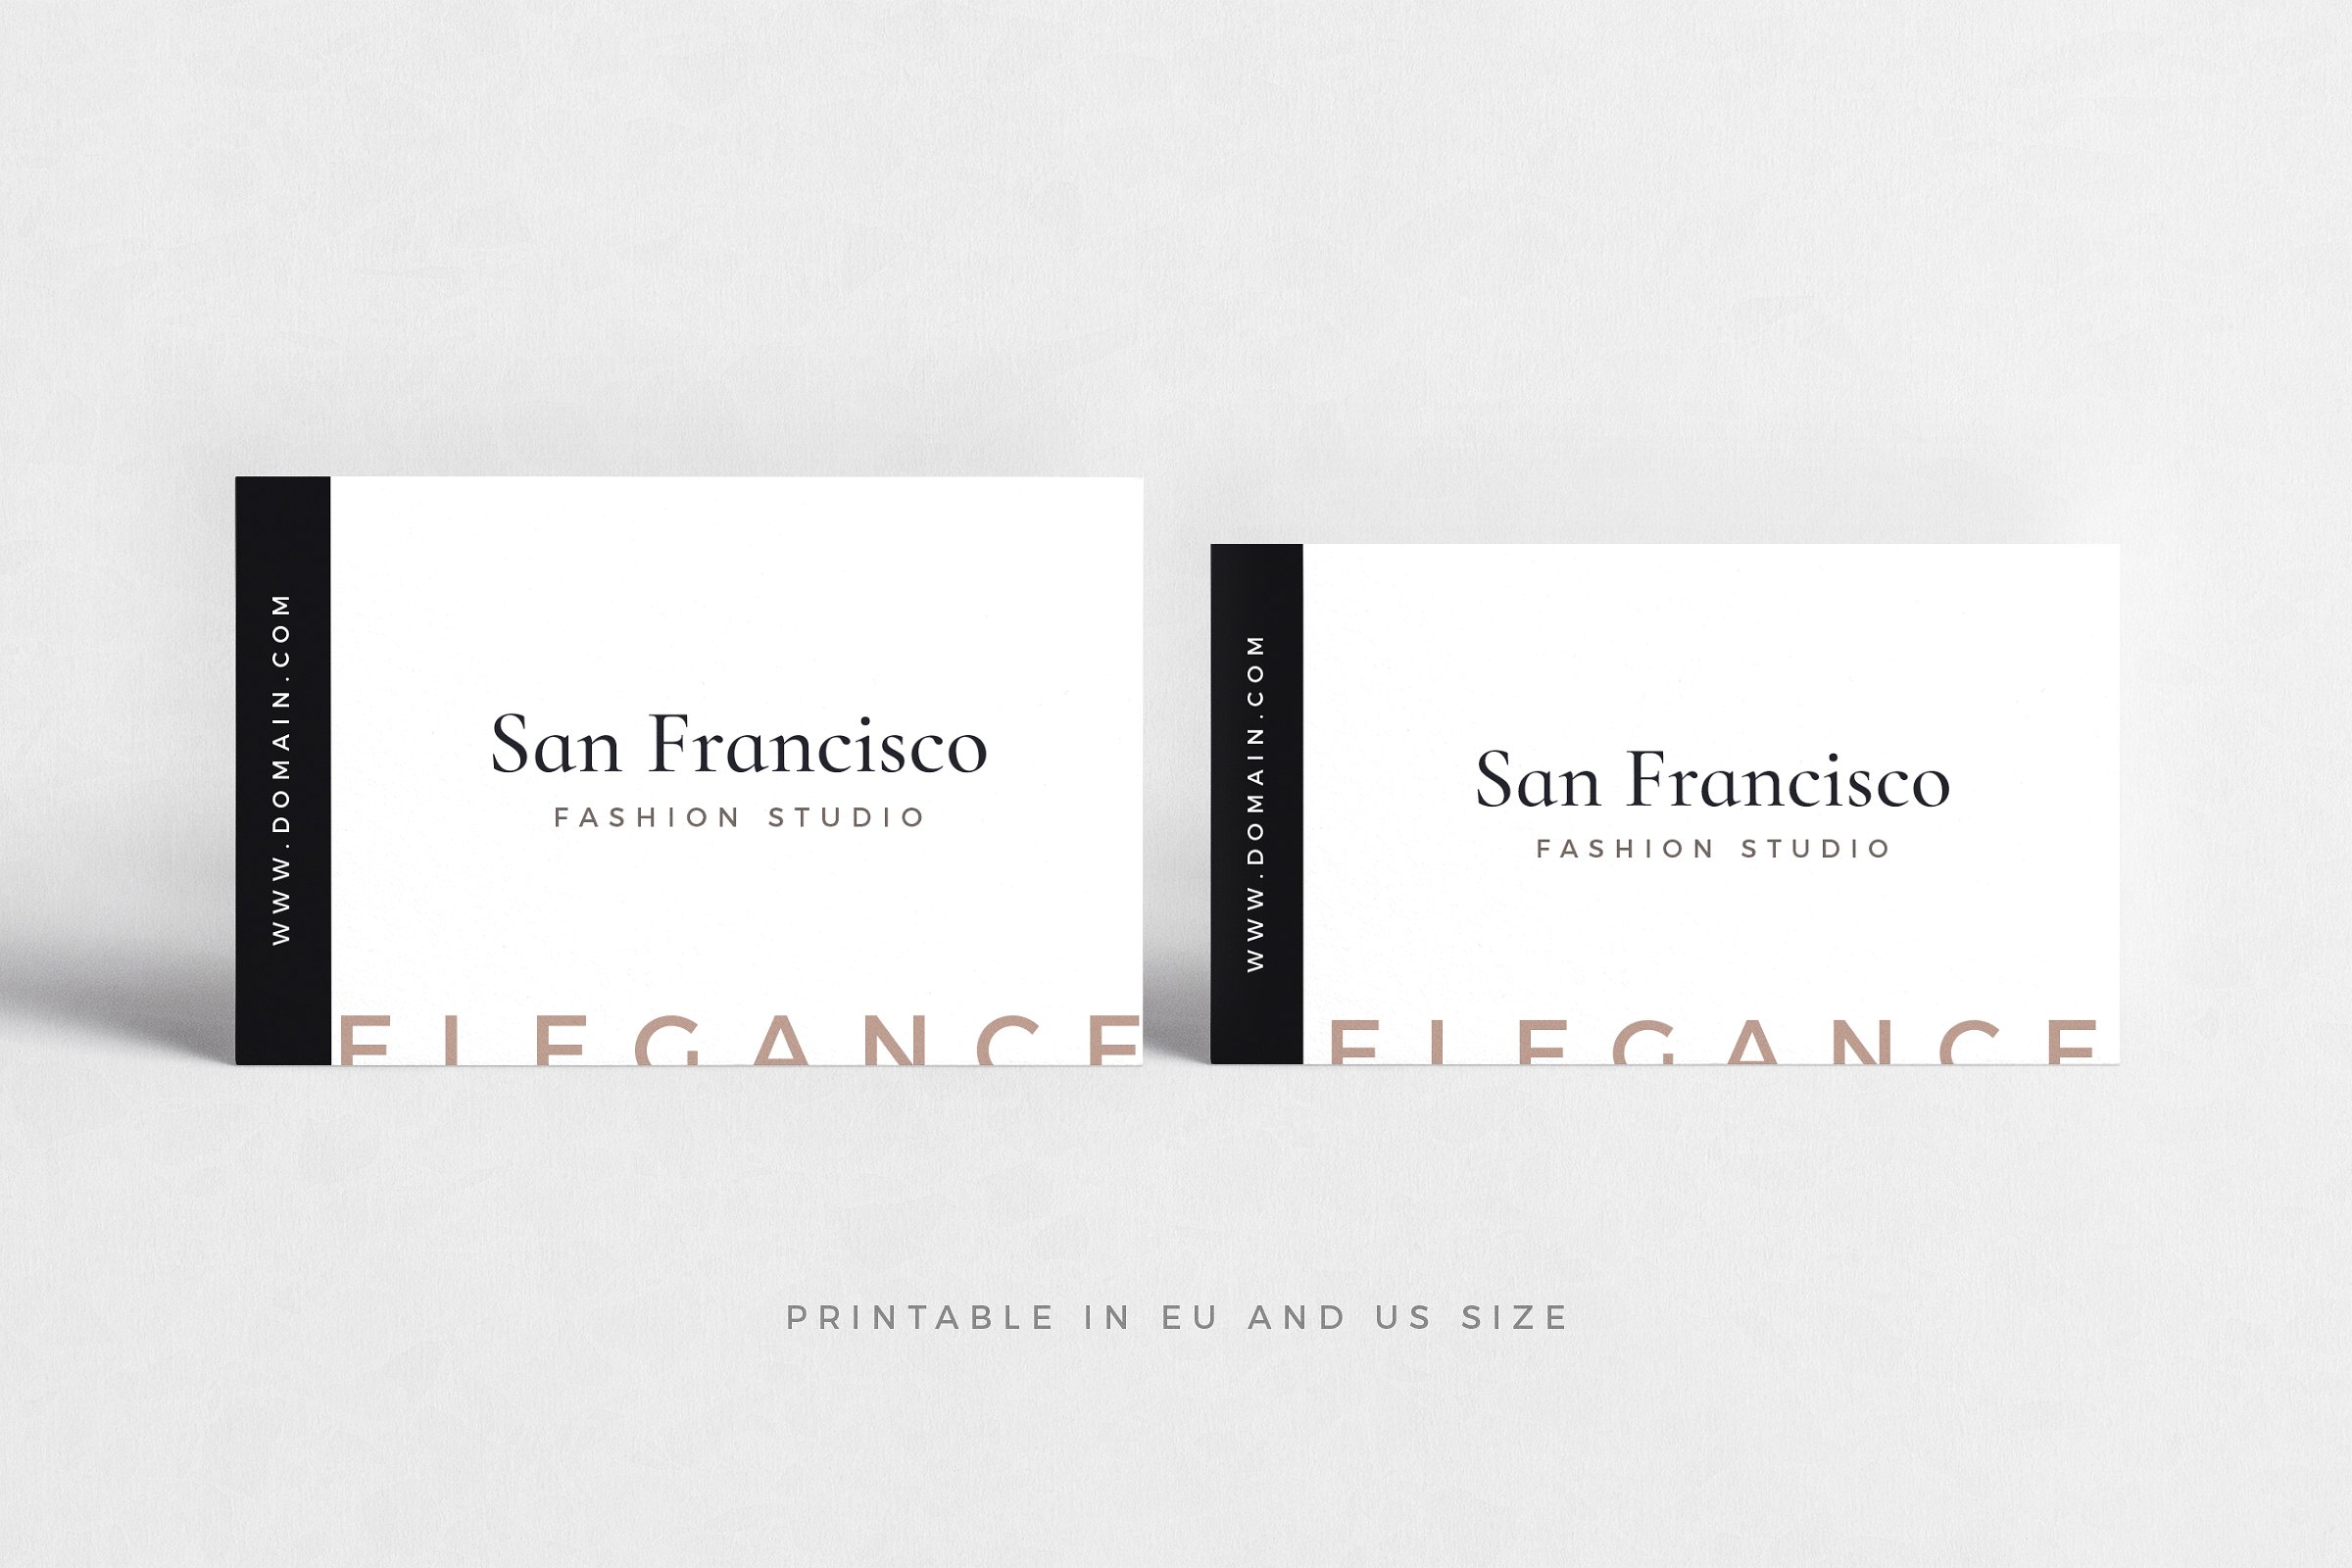 极简主义企业名片设计模板3 San Francisco Business Cards插图(2)